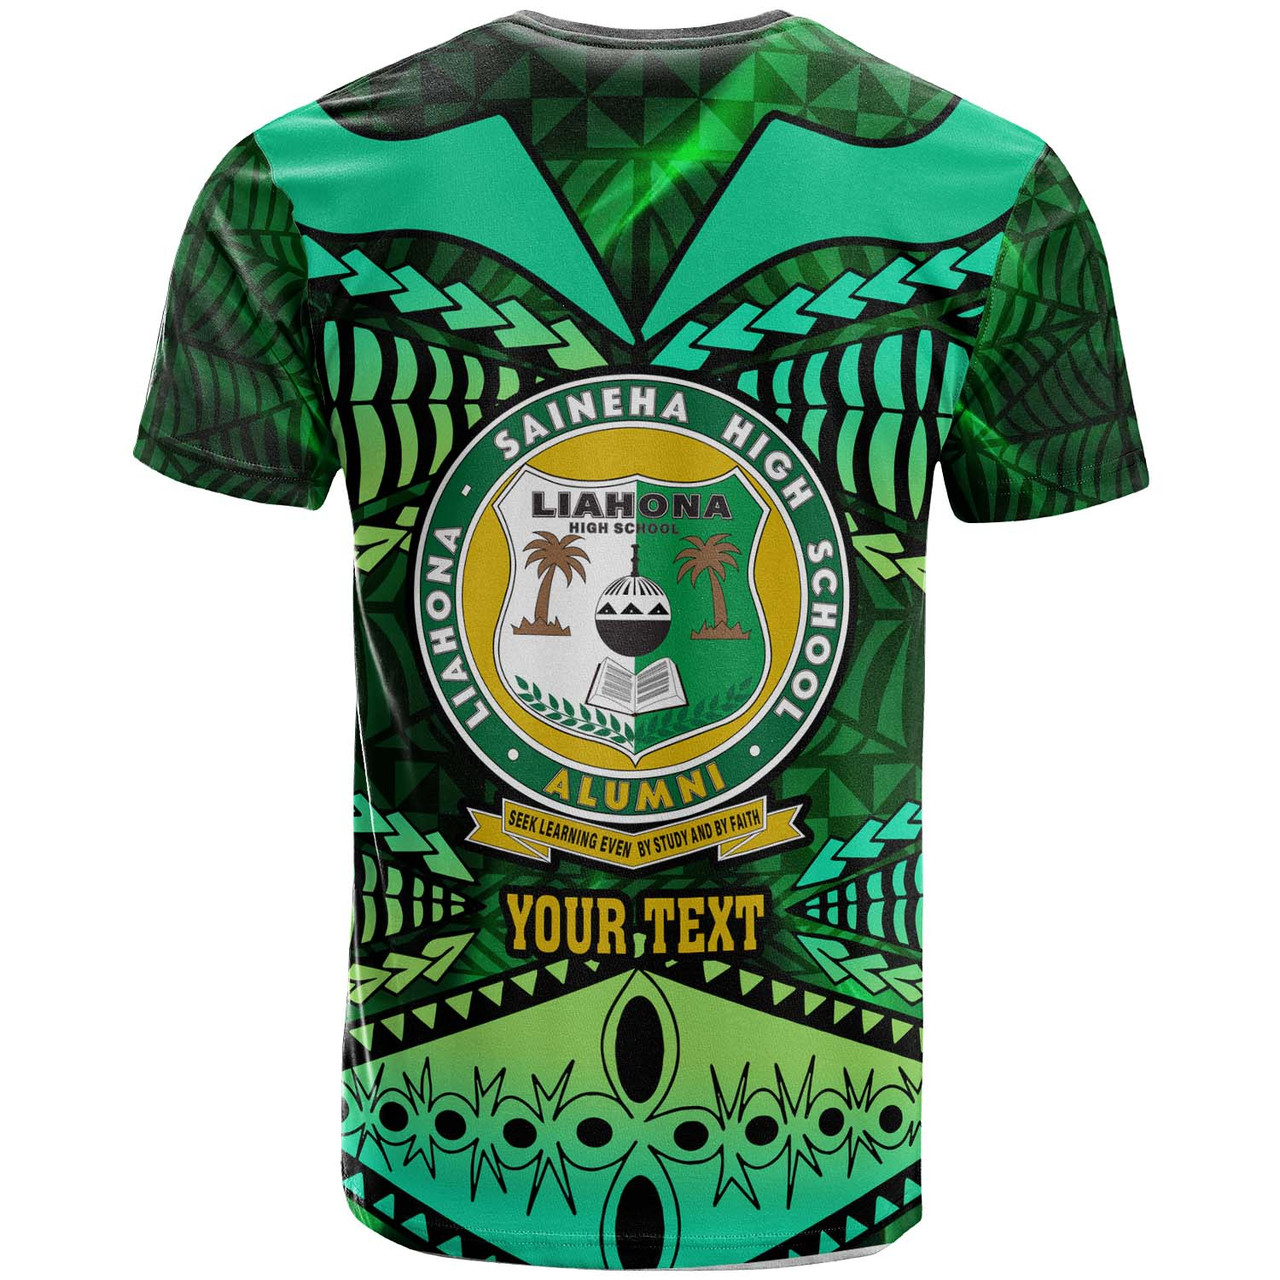 Tonga Custom T-shirt - Liahona High Shool with Tonga Patterns with Green Effect